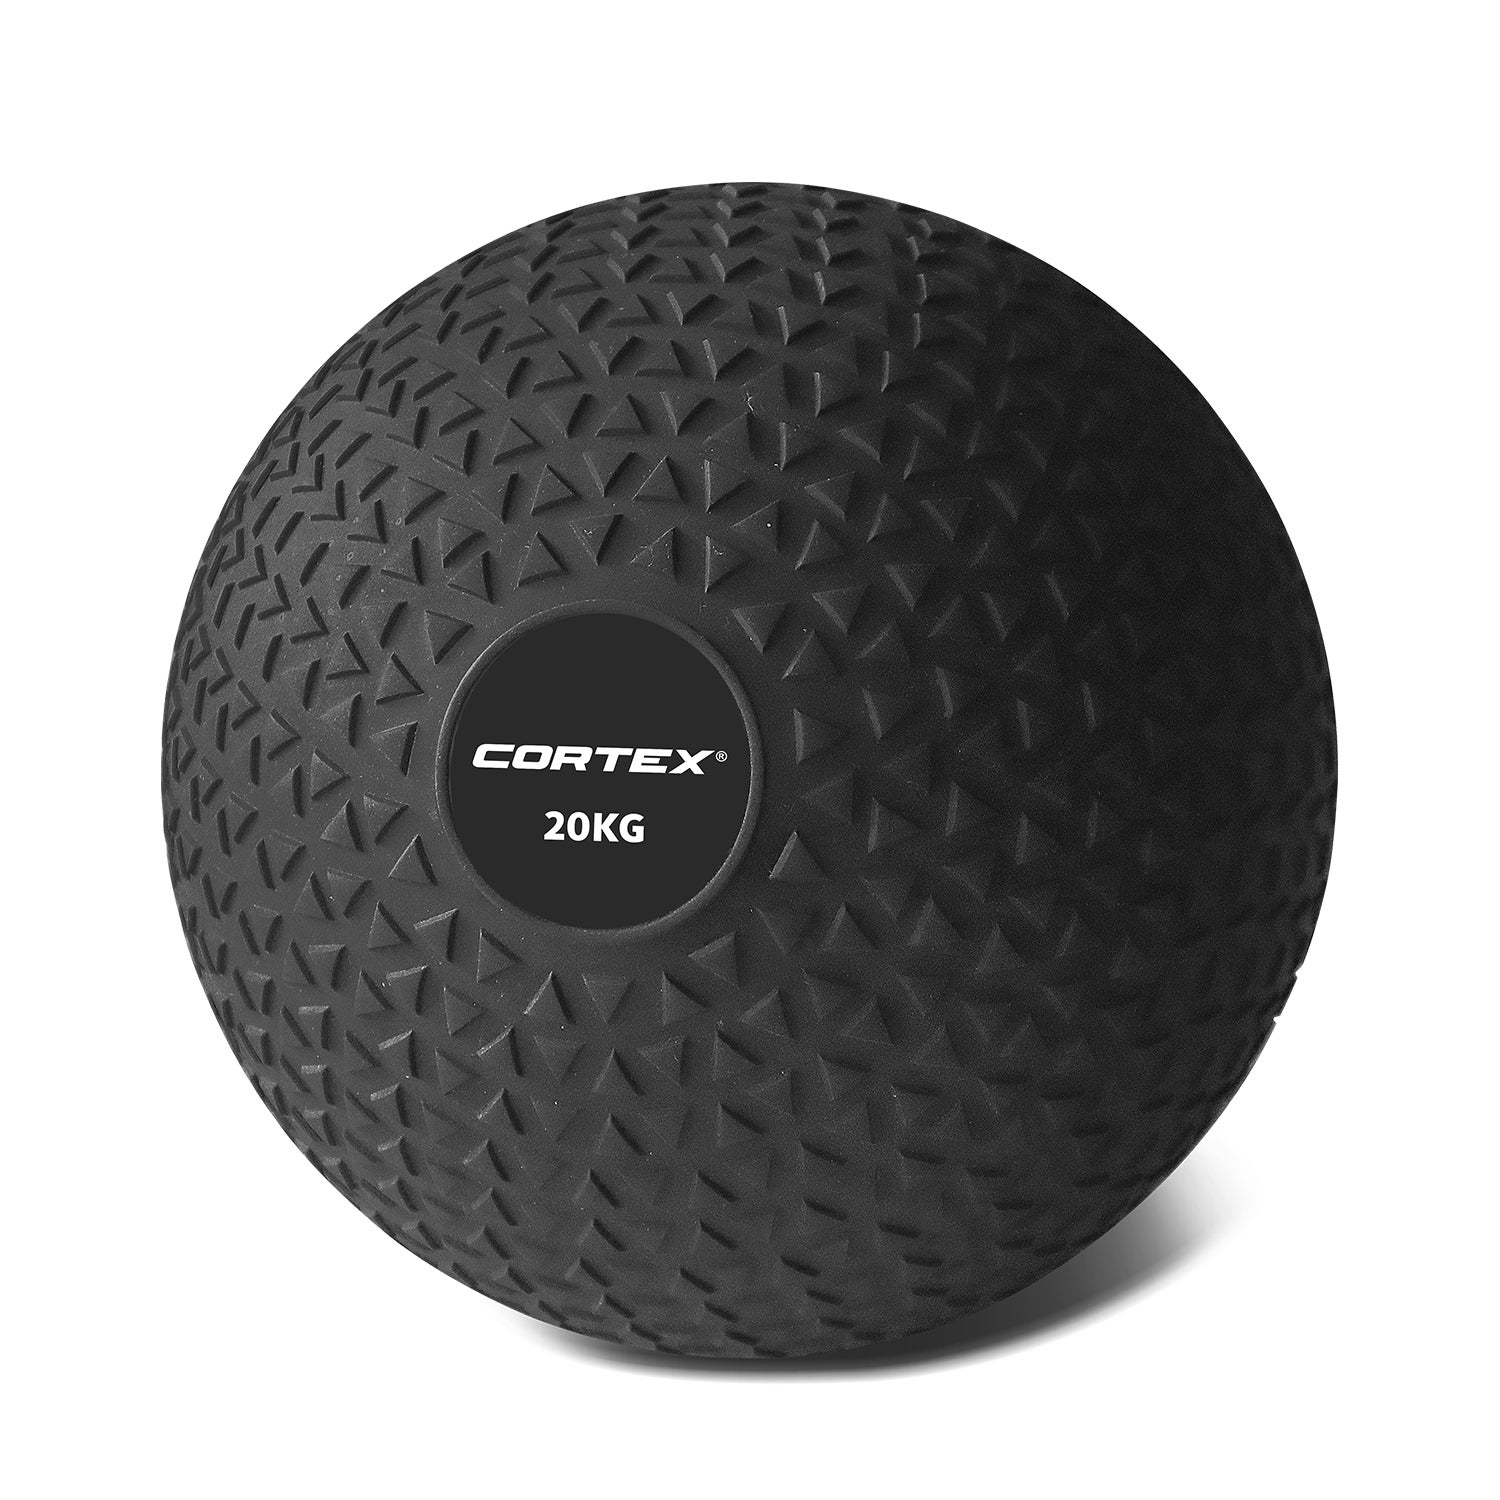 Cortex Slam Ball V2 20kg